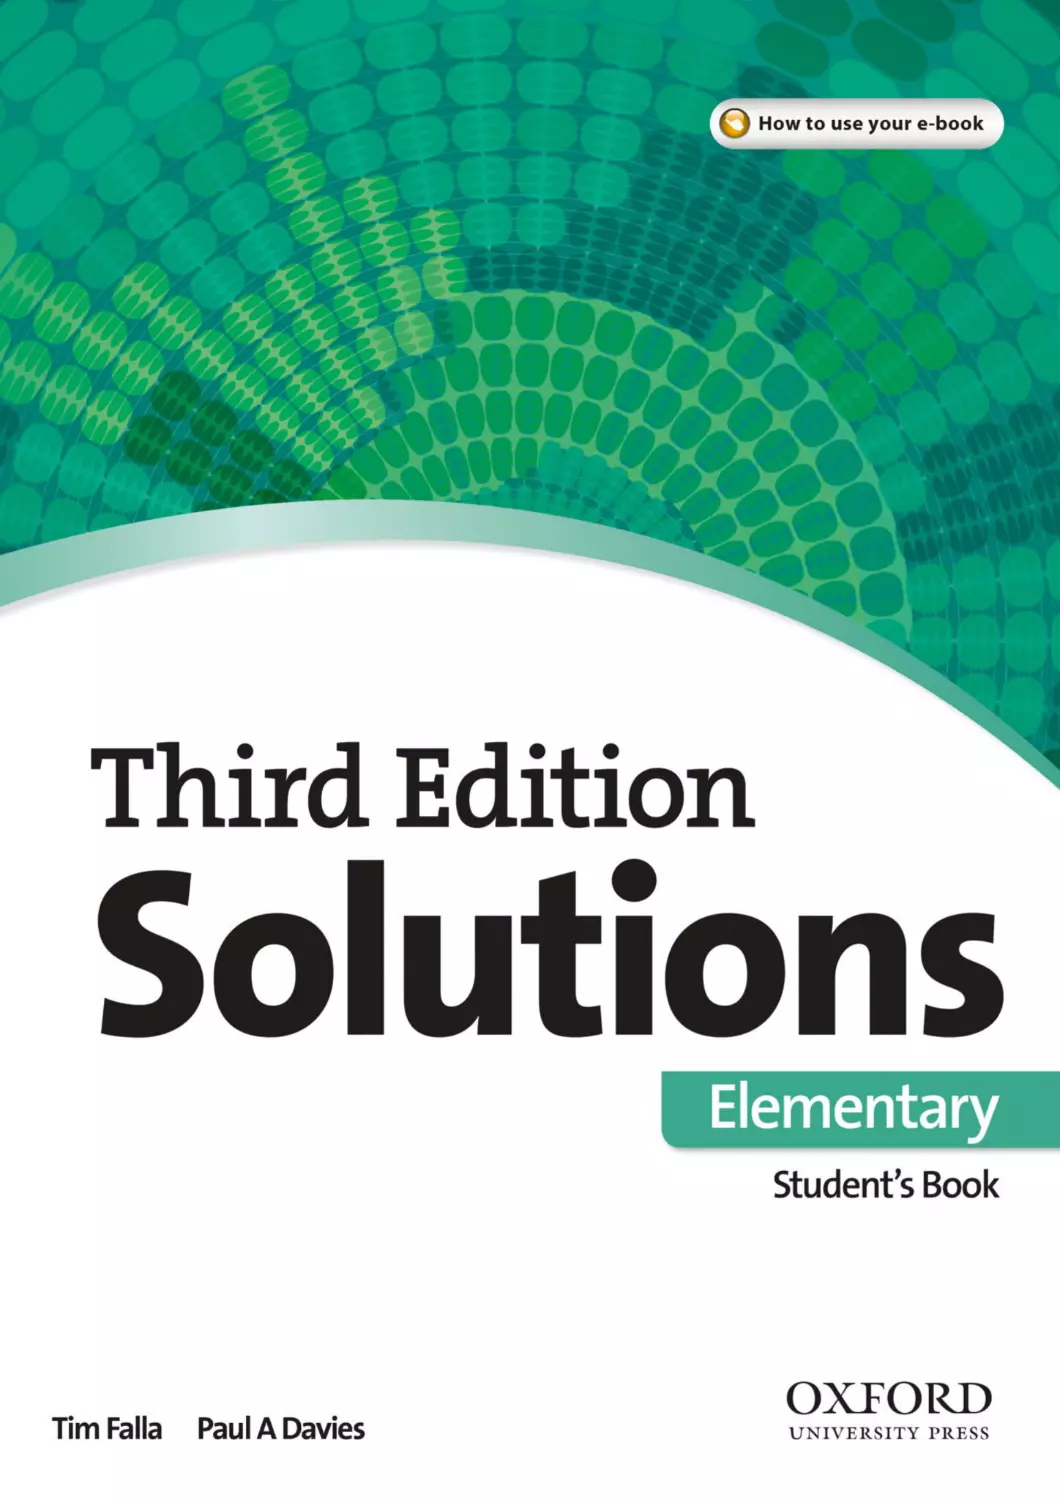 Solutions elementary pdf. Solutions Elementary 3rd Edition. Солюшнс элементари 3 издание. Solutions Elementary 3rd Edition Workbook. Учебник third Edition solutions Elementary.